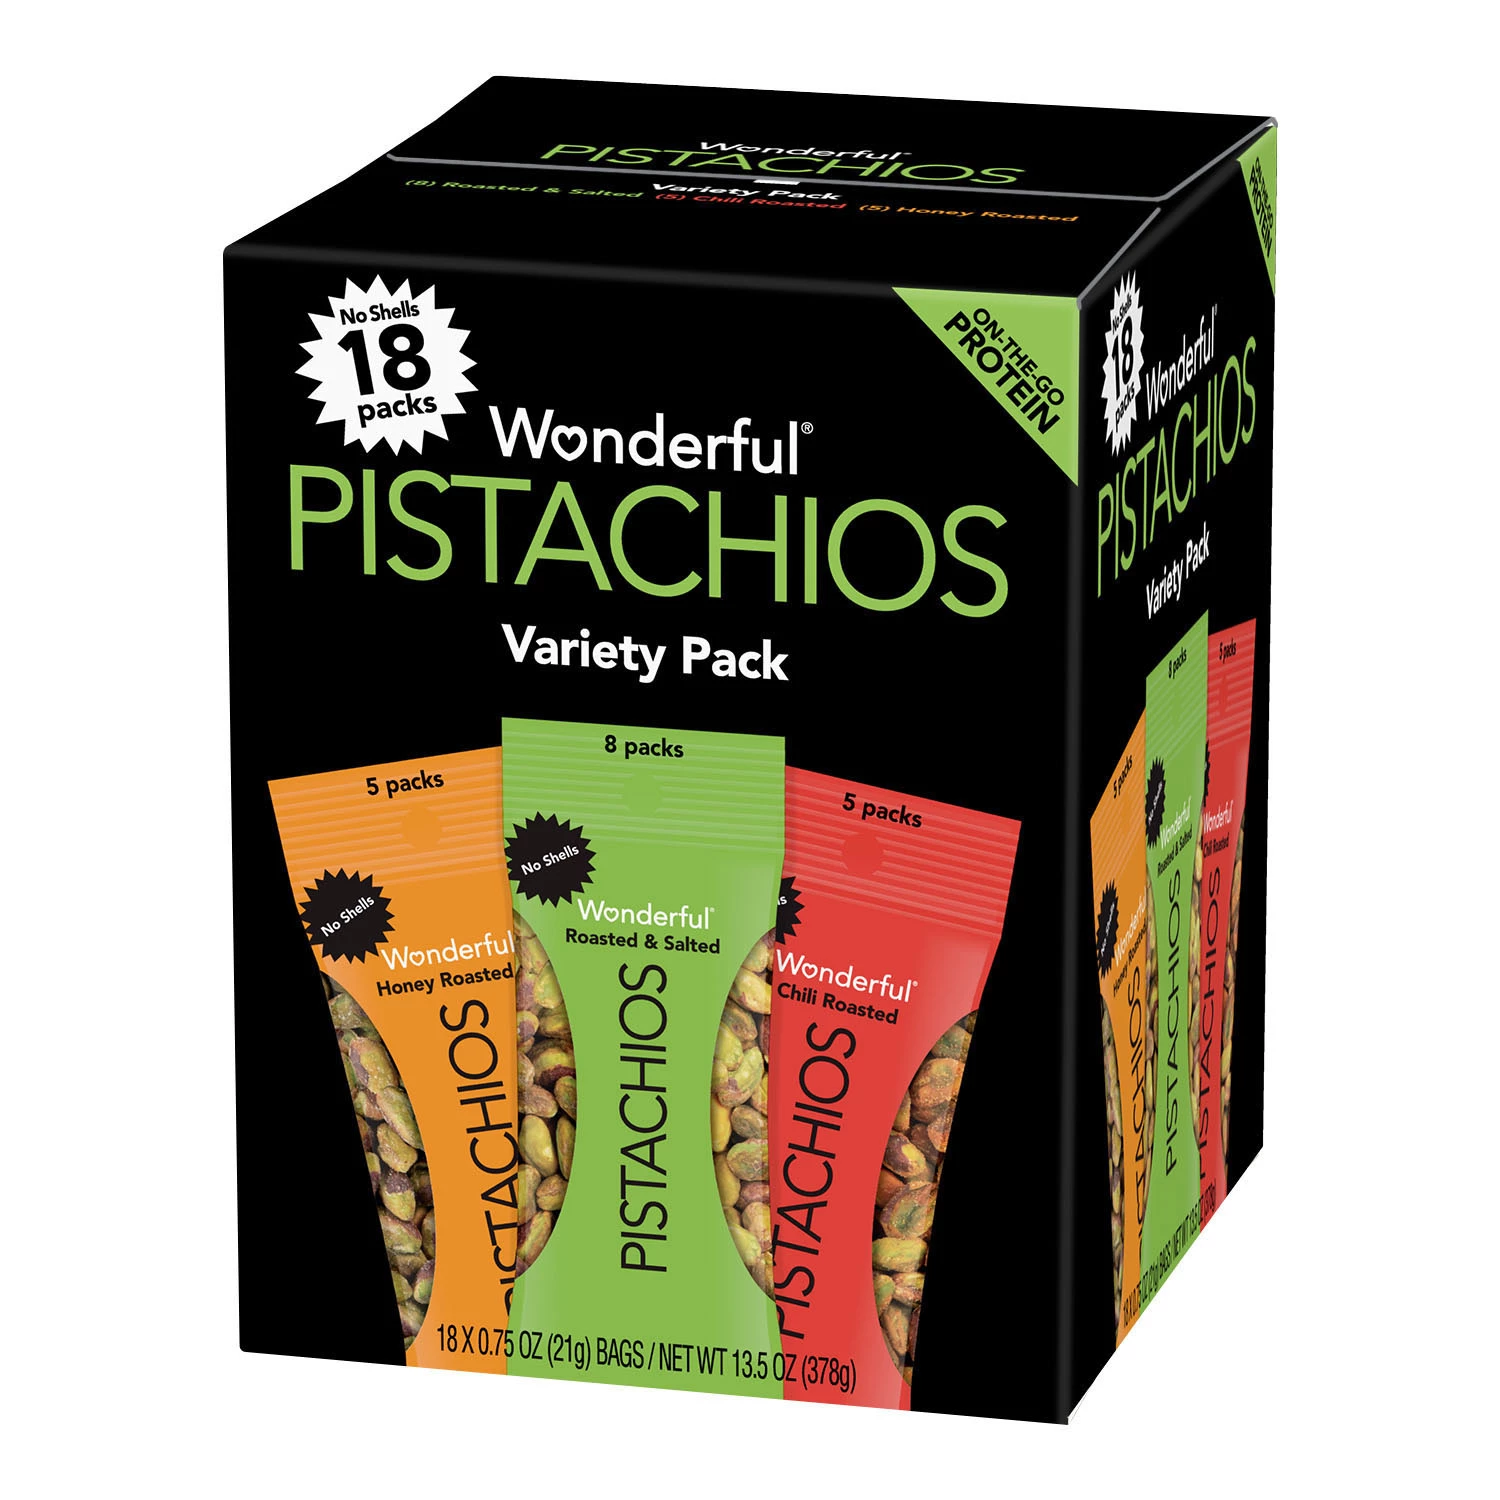 Wonderful Pistachios No Shells Variety Pack